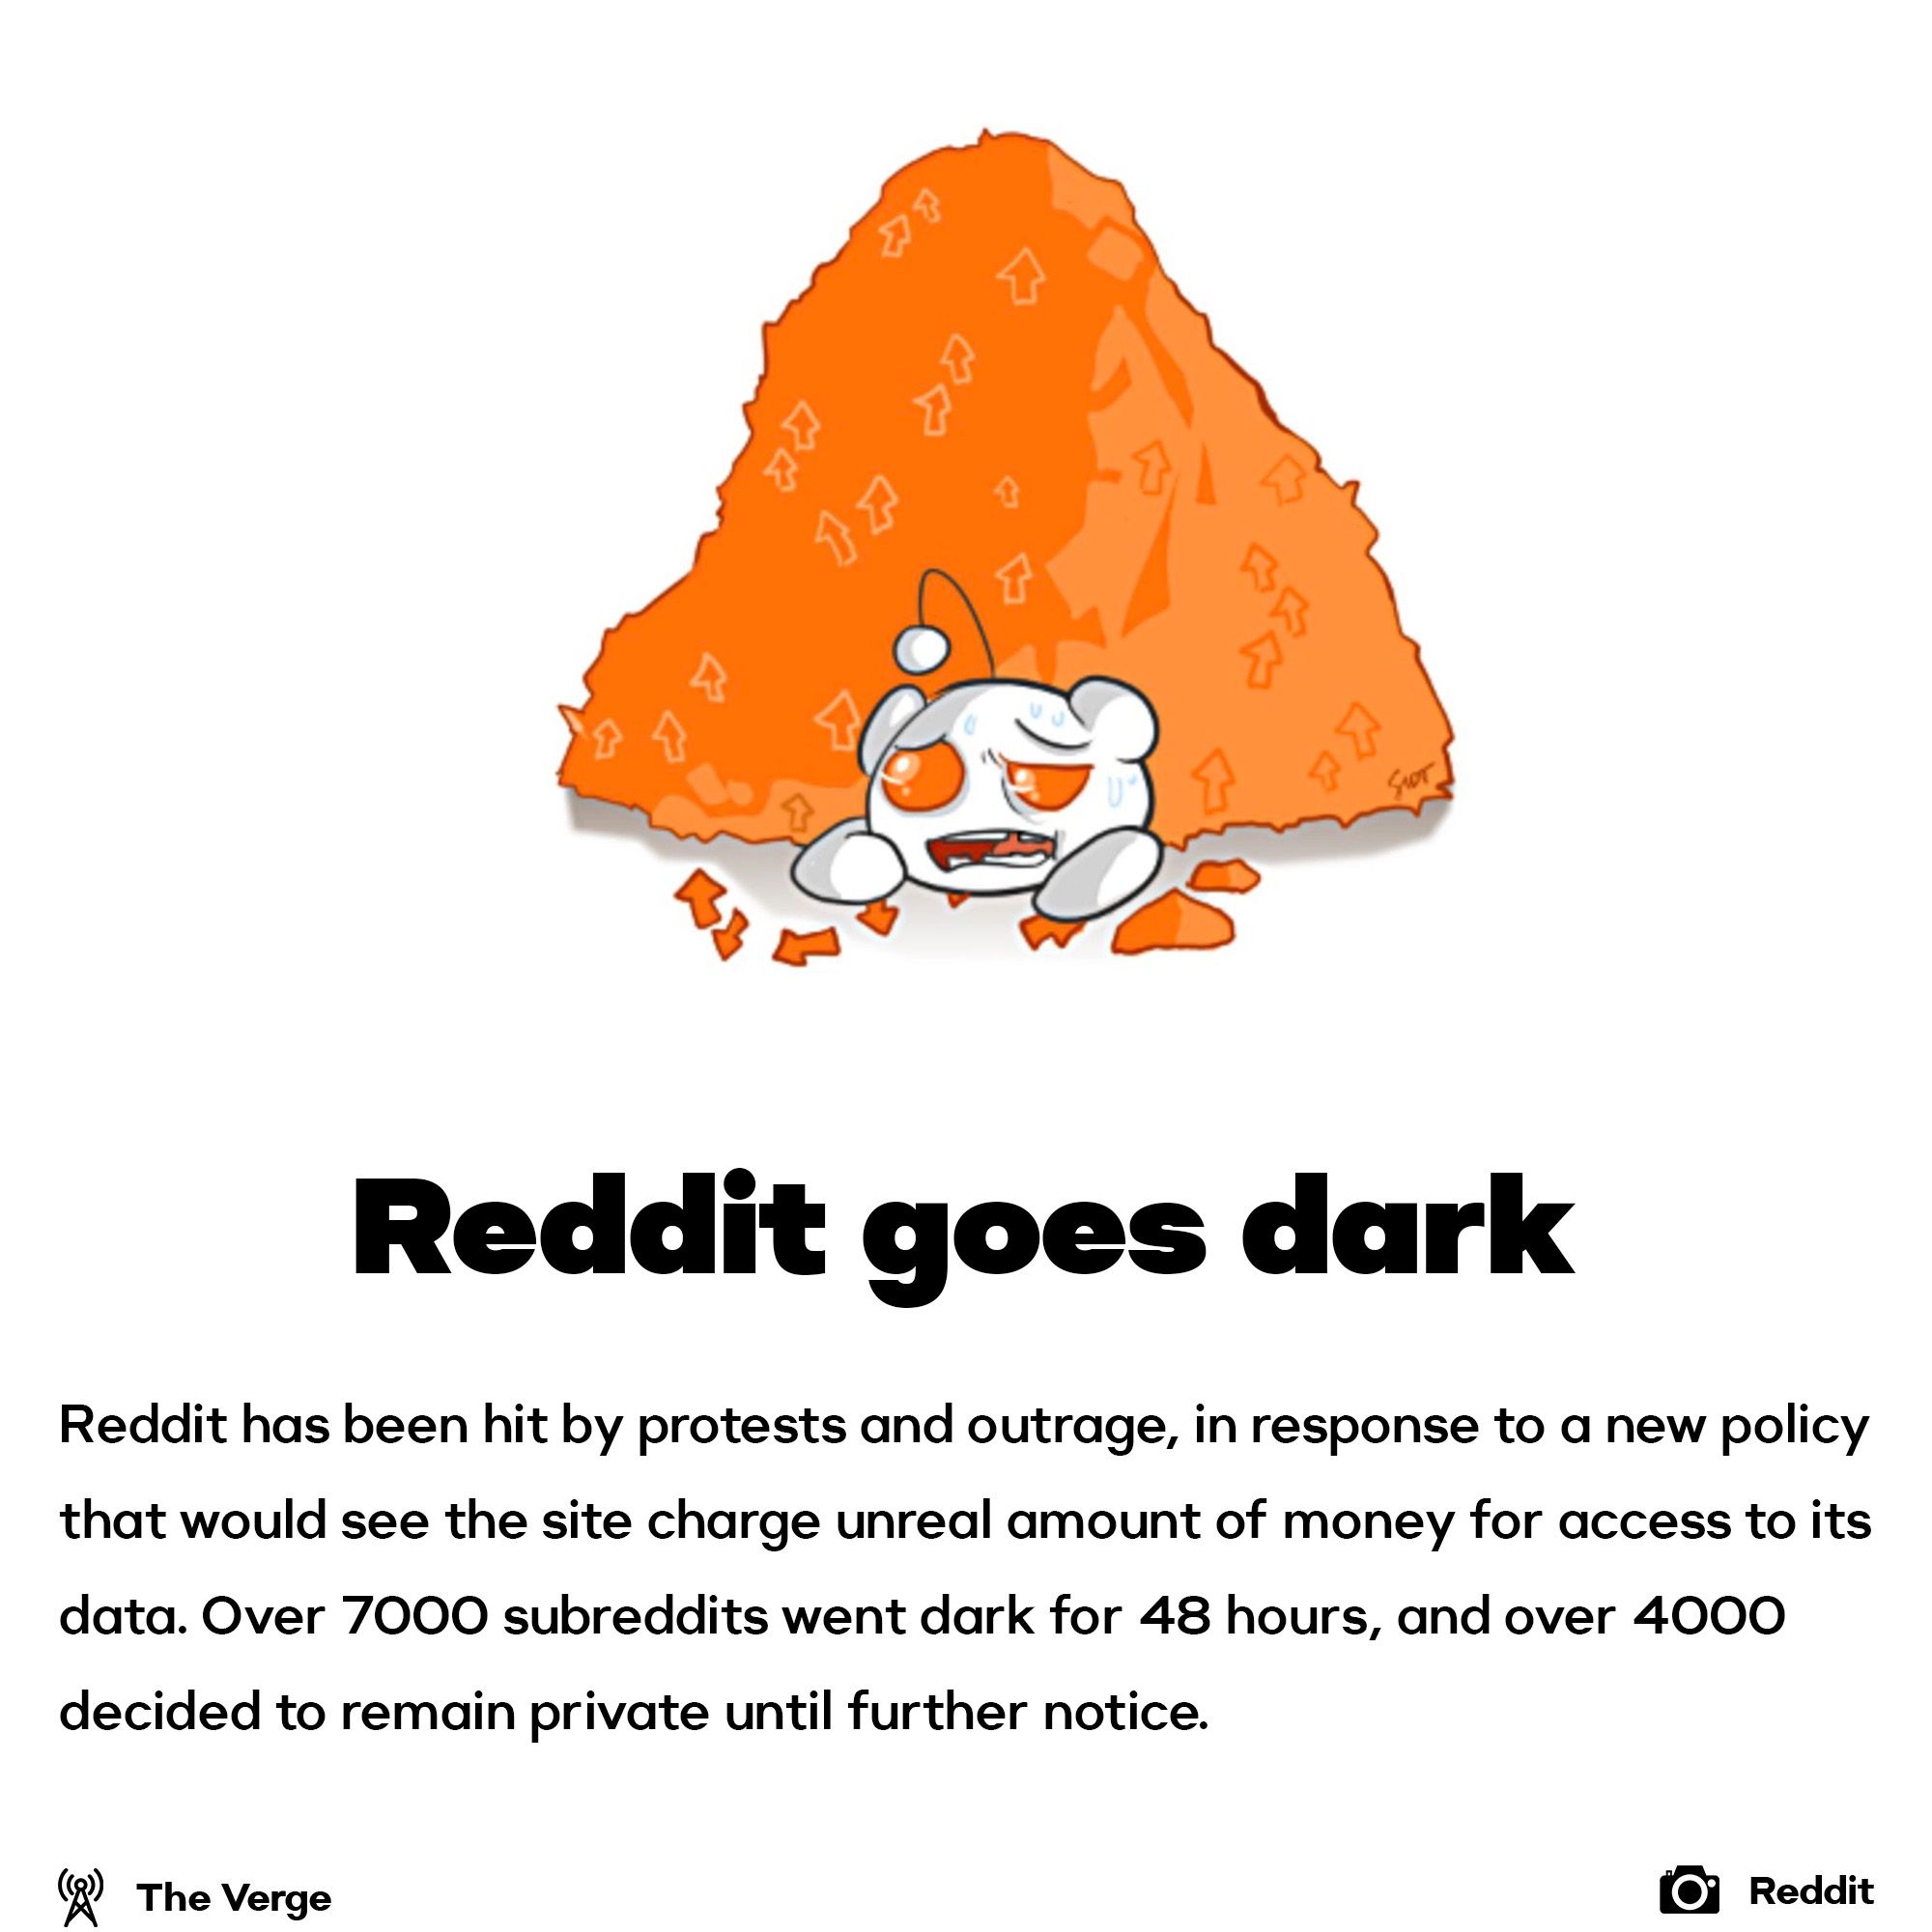 Reddit went dark